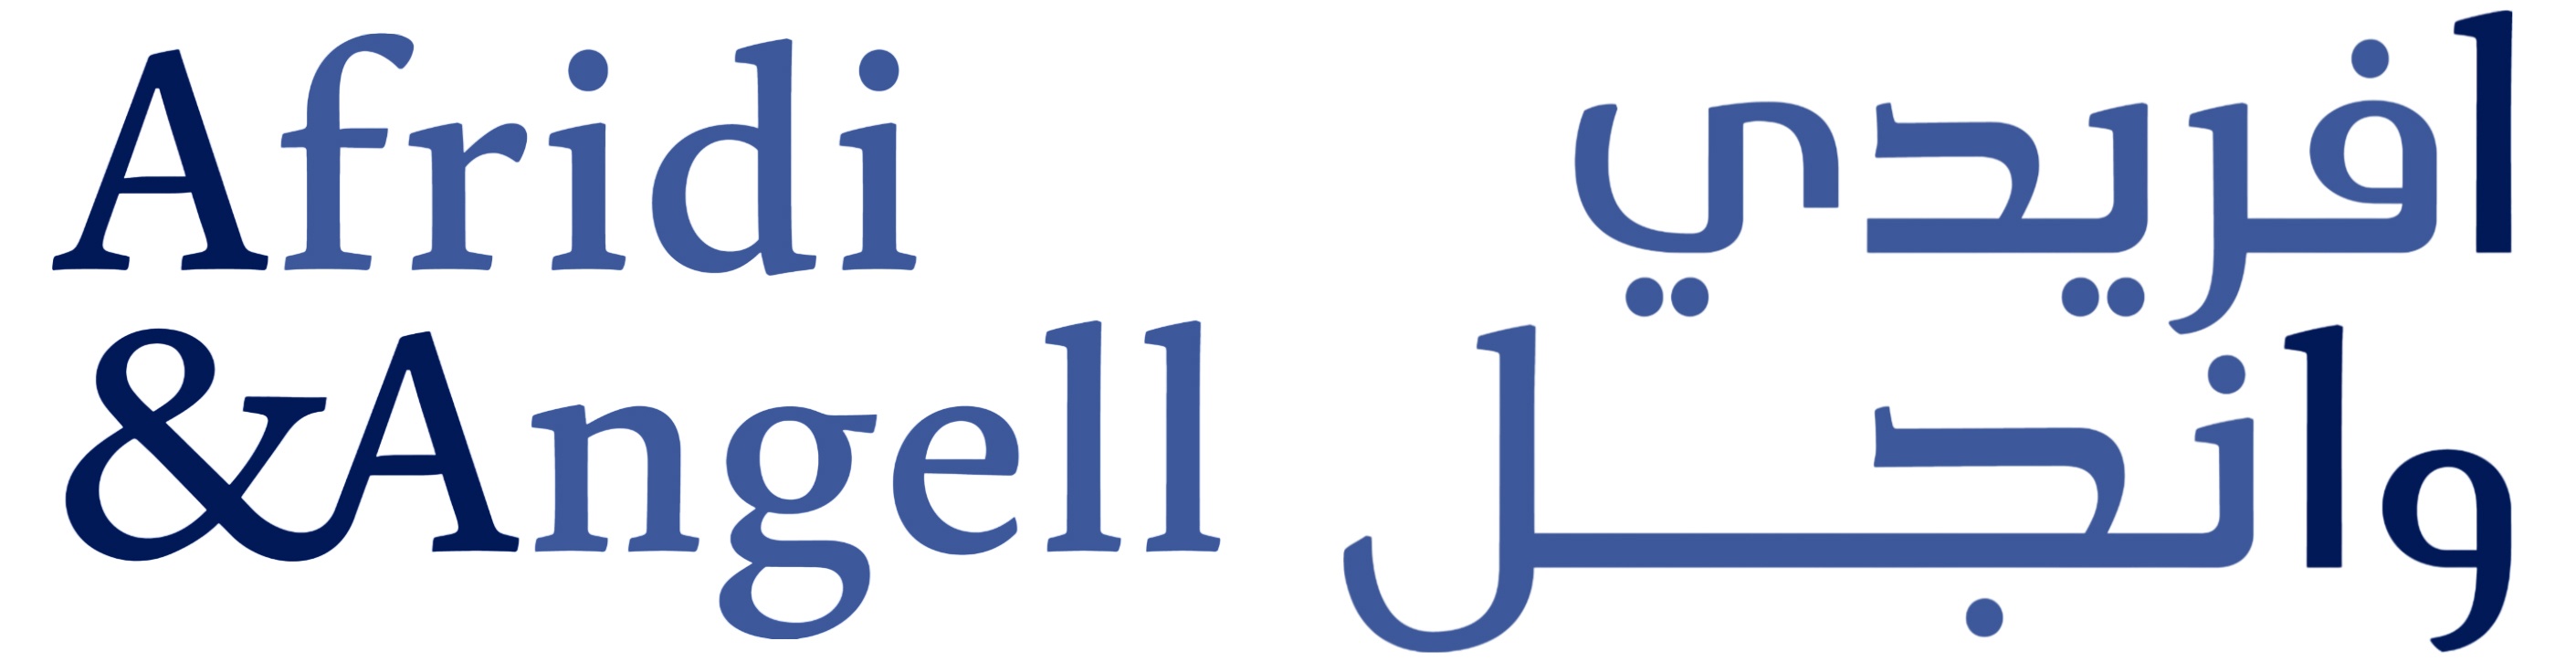 Afridi & Angell logo